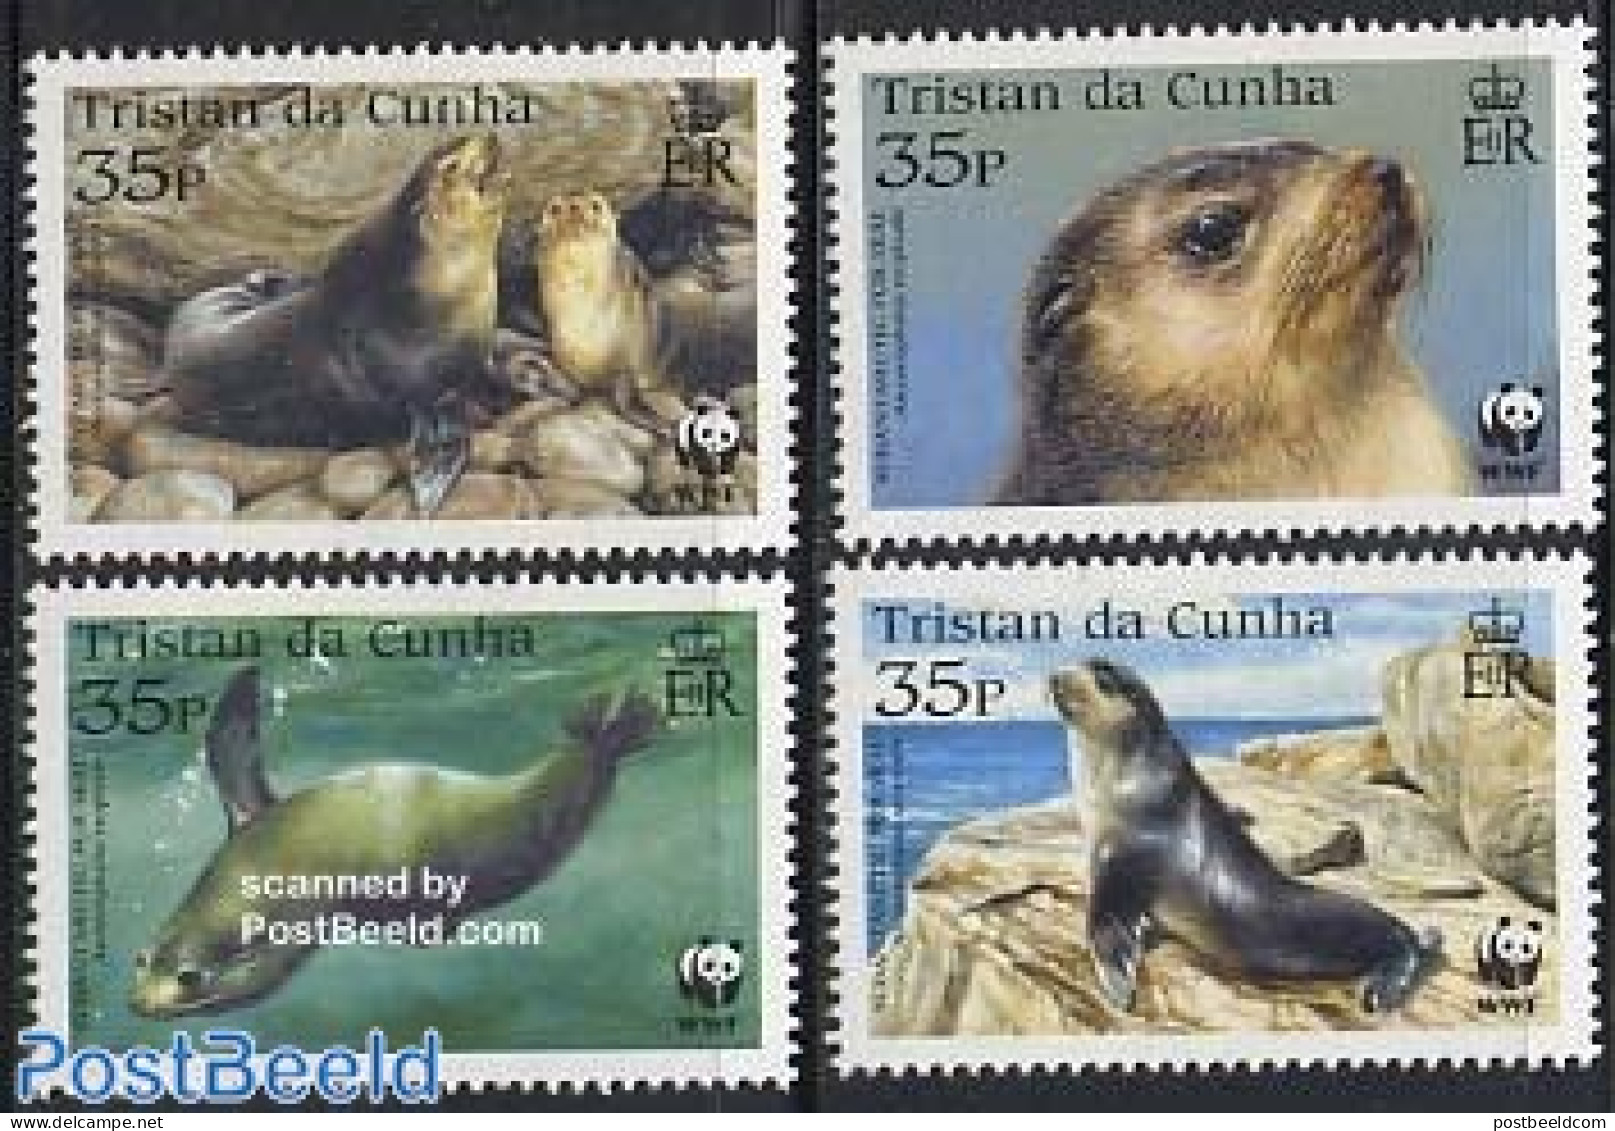 Tristan Da Cunha 2004 WWF, Fur Seals 4v, Mint NH, Nature - Sea Mammals - World Wildlife Fund (WWF) - Tristan Da Cunha